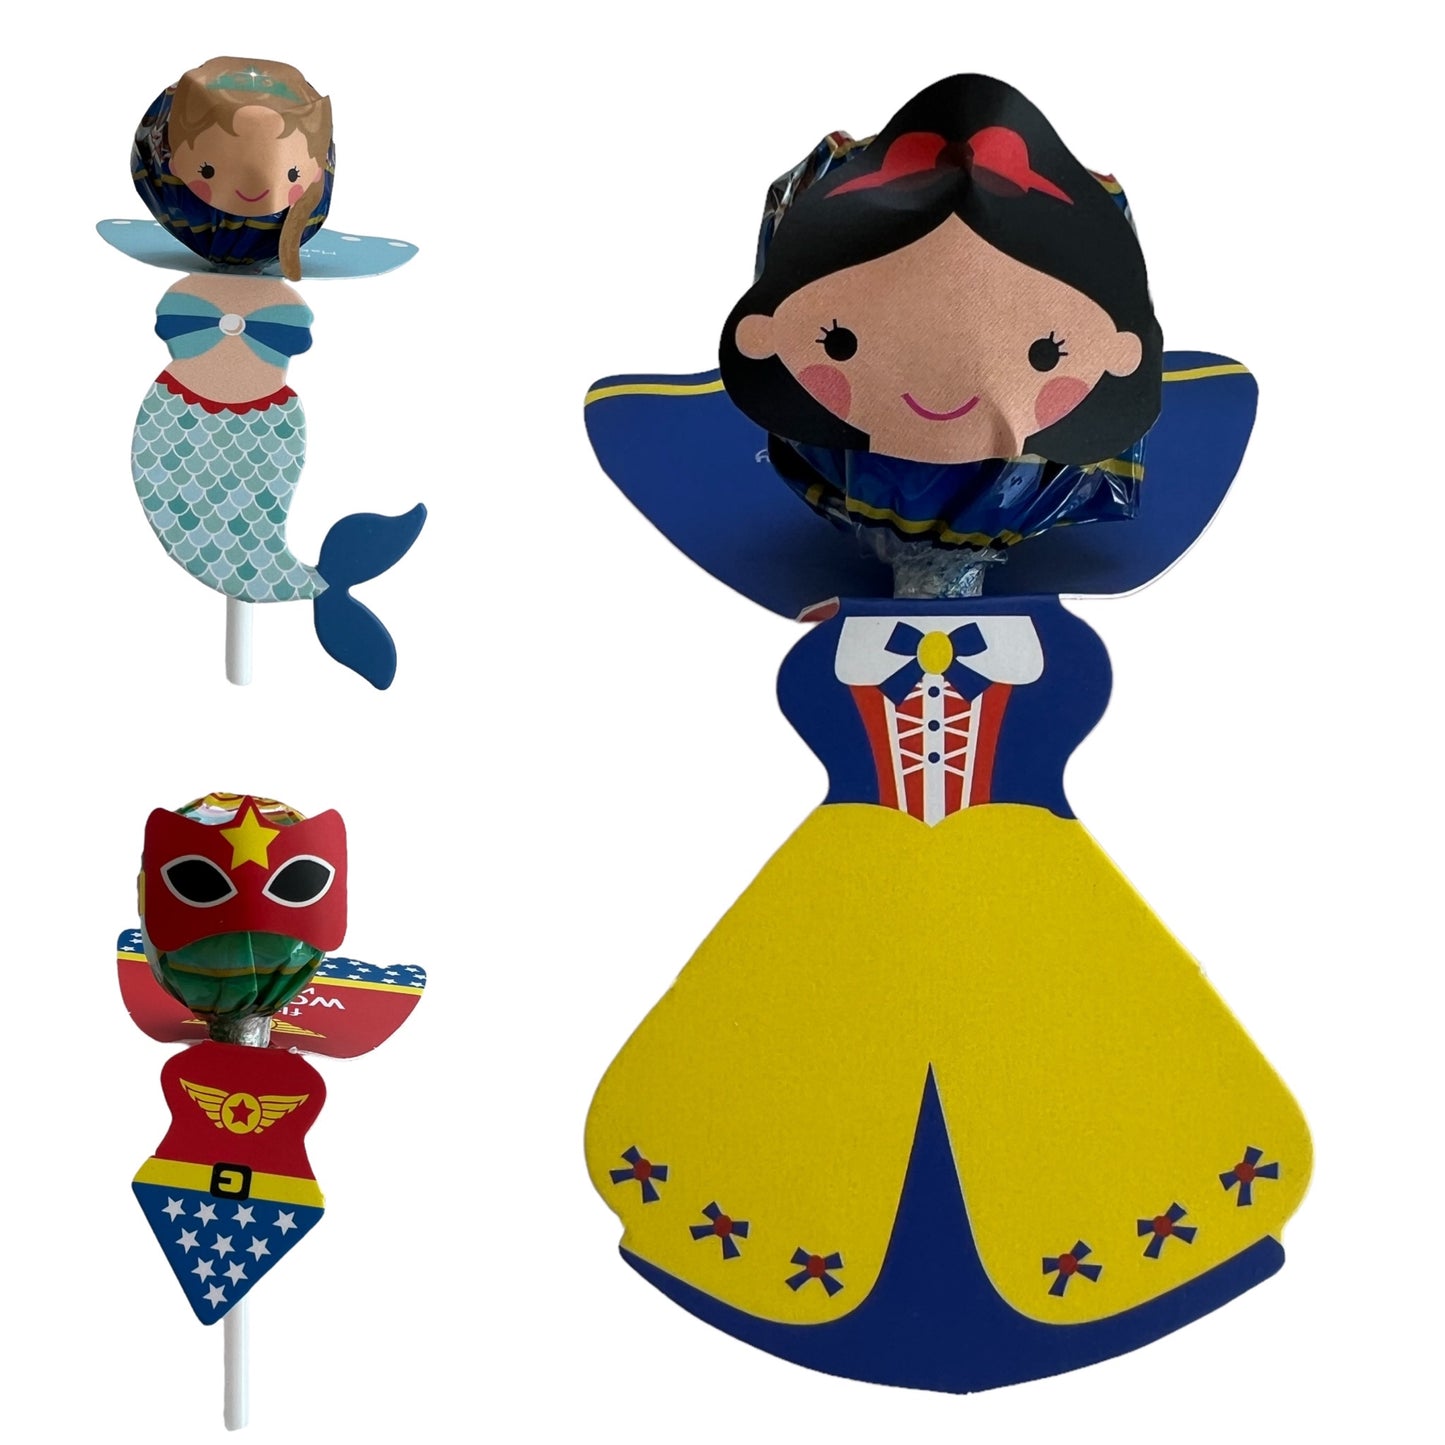 Kids Lollipop Cartoon Figurines Party Favors SPIRIT SPARKPLUGS Assorted Figurines (Princesses)  